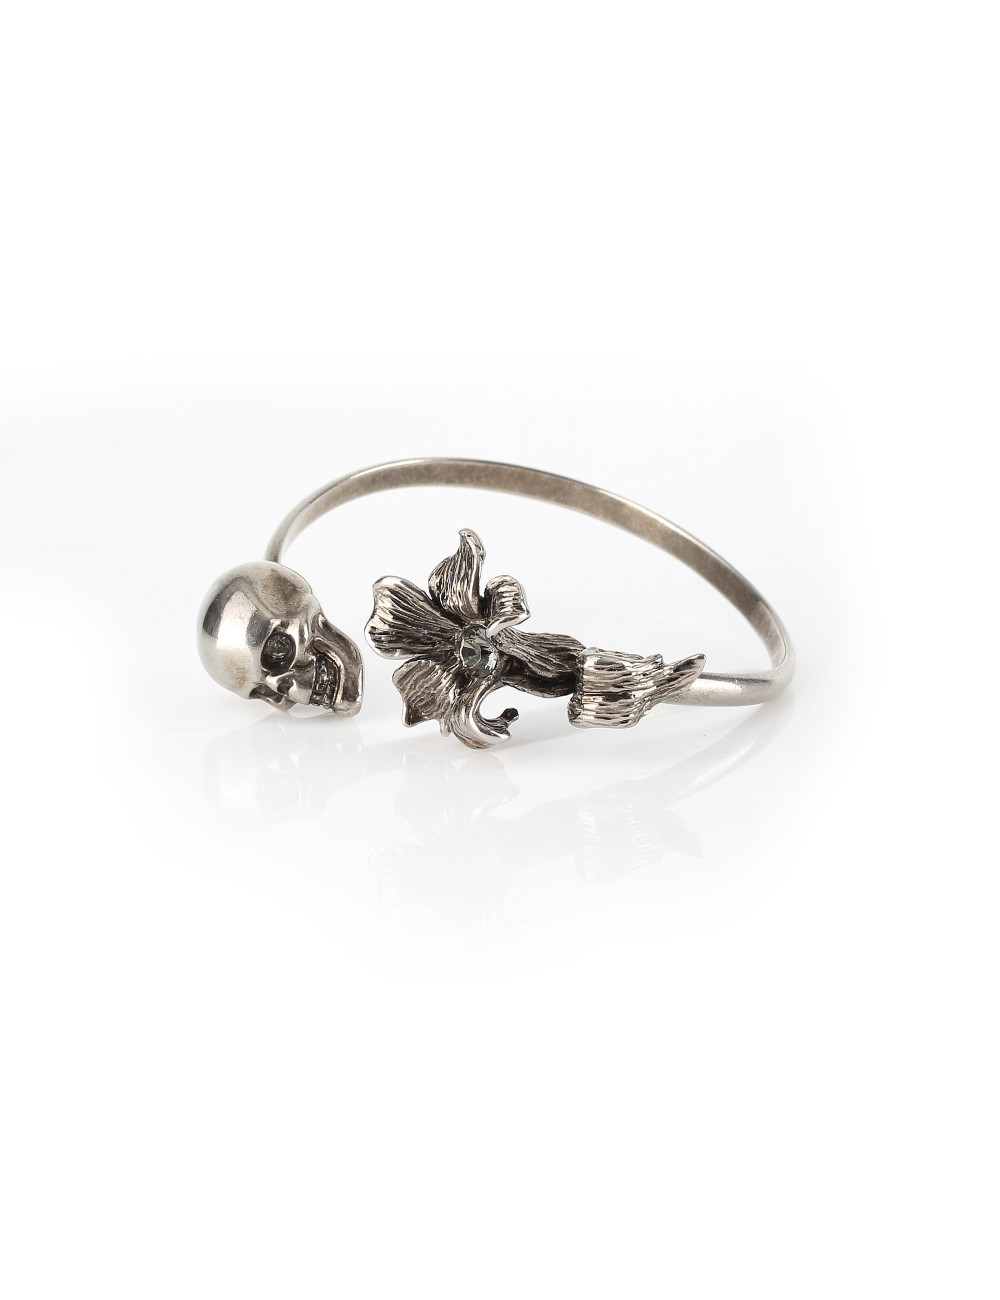 Clear Swarovski Crystal 'Double Skull' Flex Bangle Bracelet In Gold Plating  - Adjustable - avalaya.com